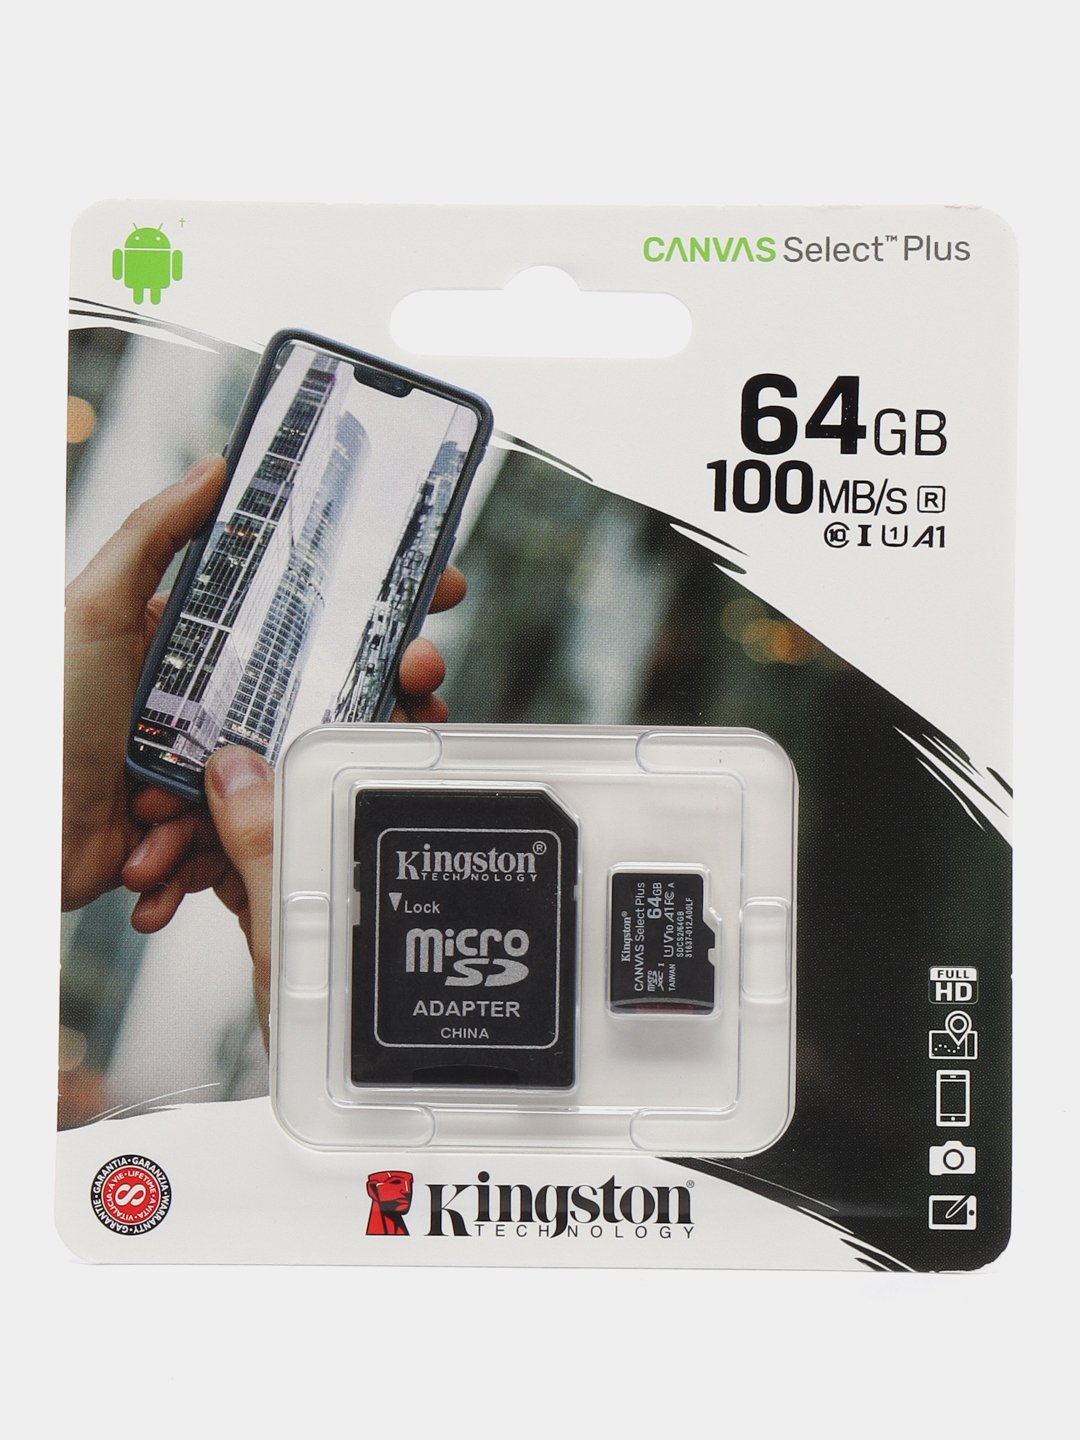 КартапамятиKingstonCanvasSelectPlusClass10,microSD+SDдлясмартфона,регистраторакупитьпоцене698₽винтернет-магазинеKazanExpress